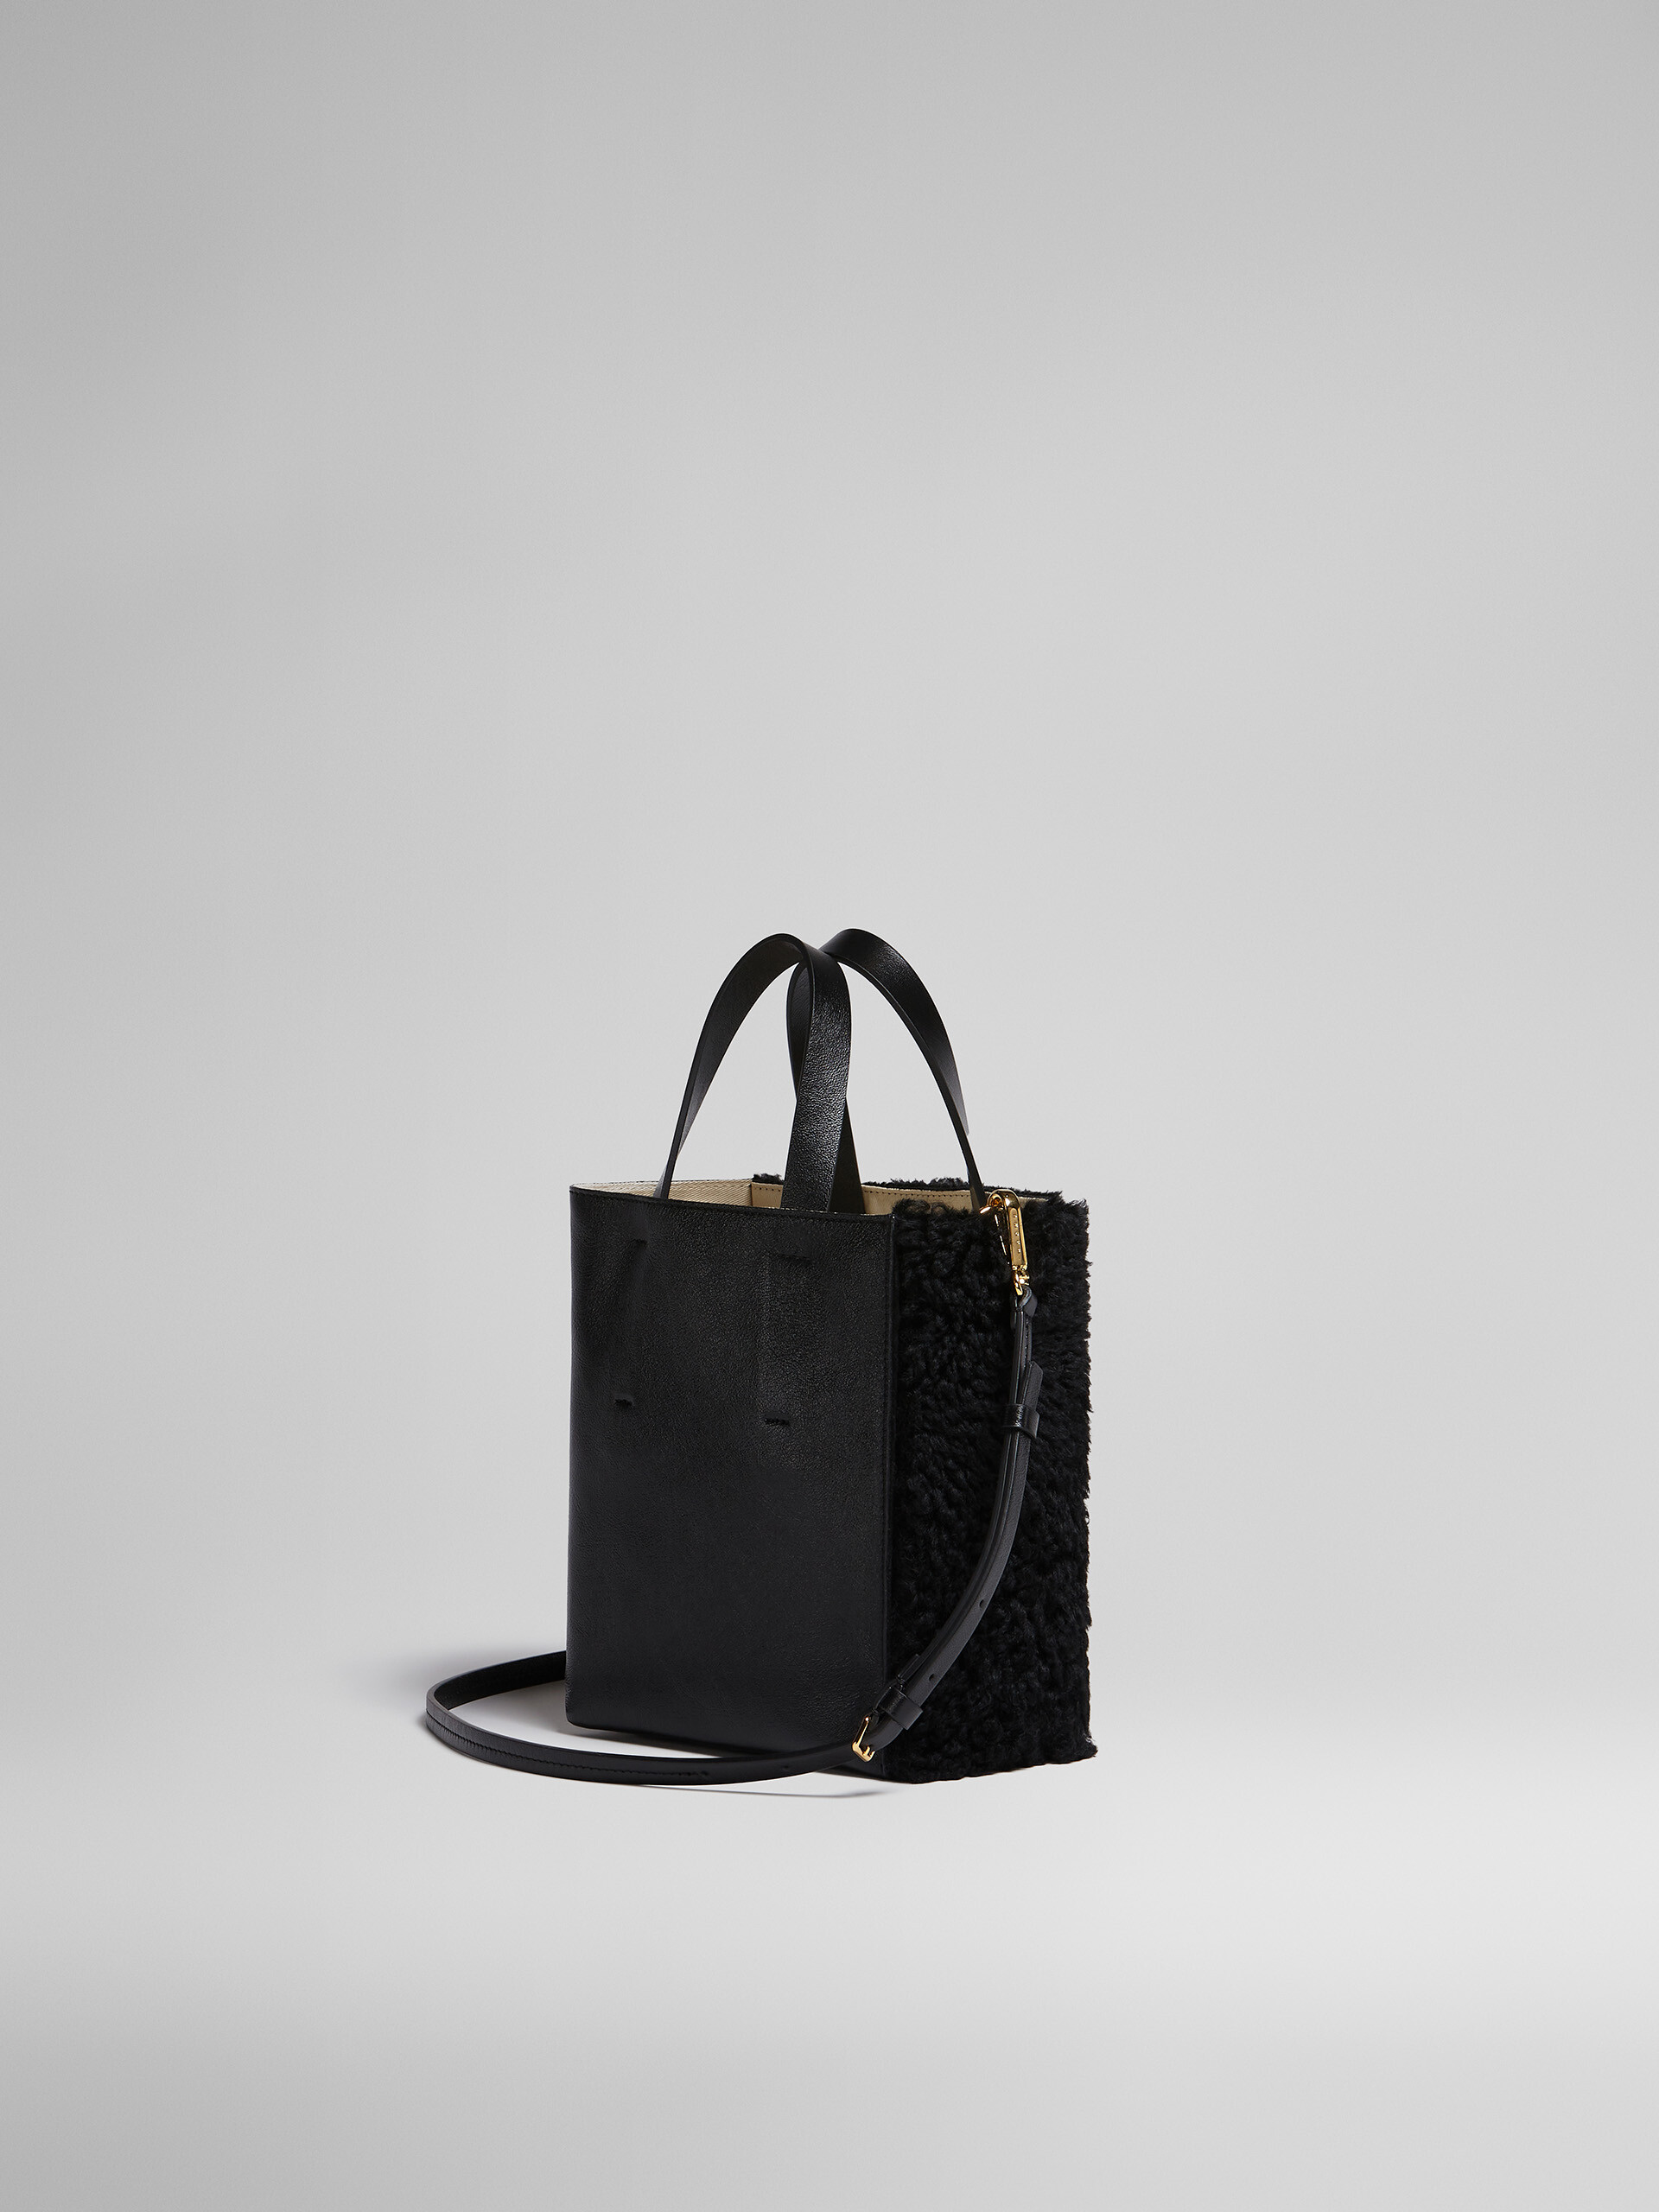 MUSEO SOFT mini bag in black shearling - Shopping Bags - Image 3